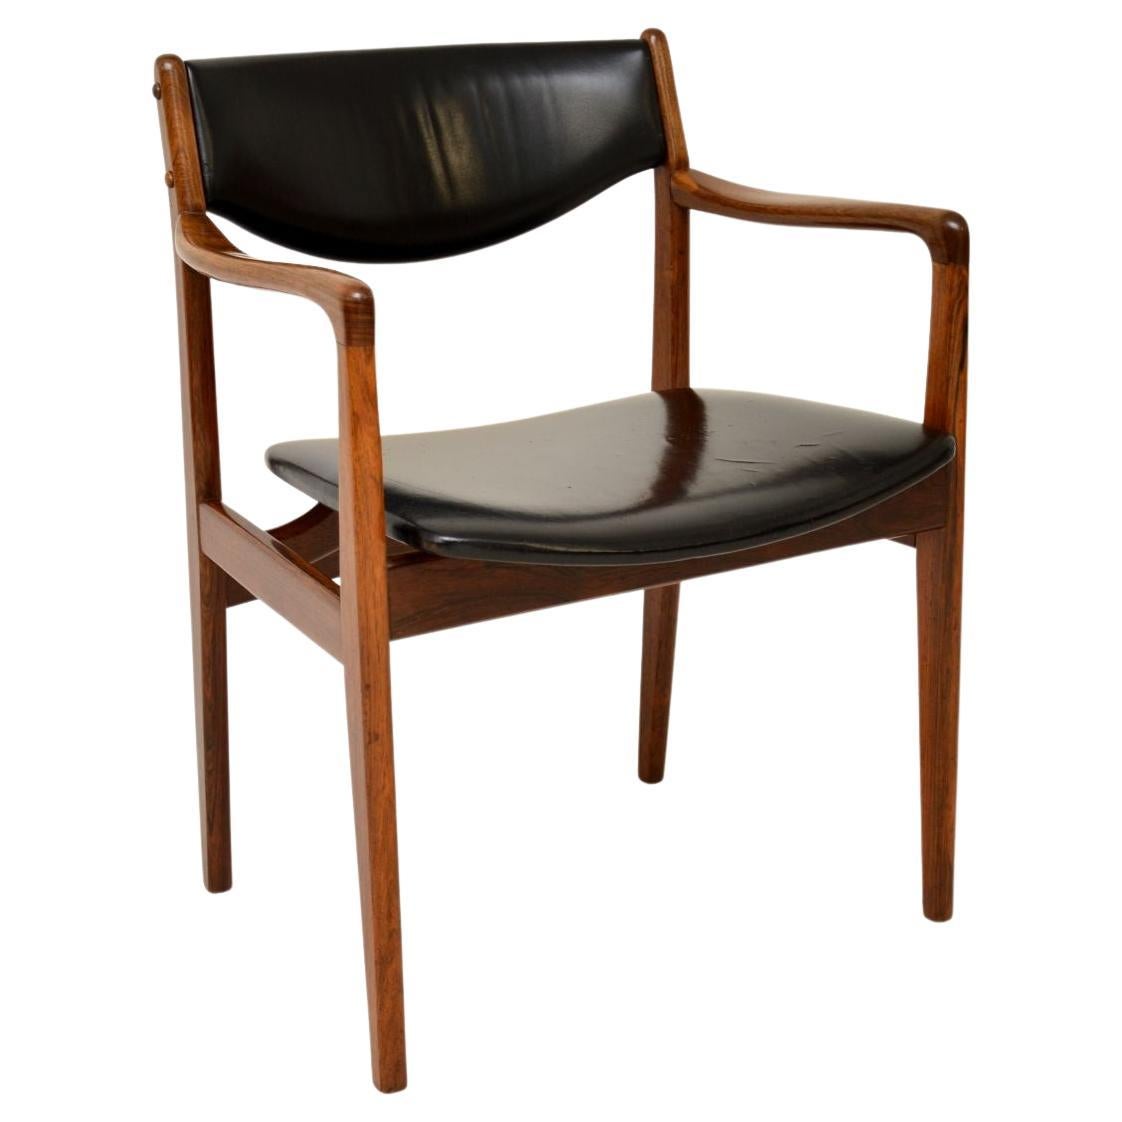 1960s Danish Vintage Desk Chair / Armchair